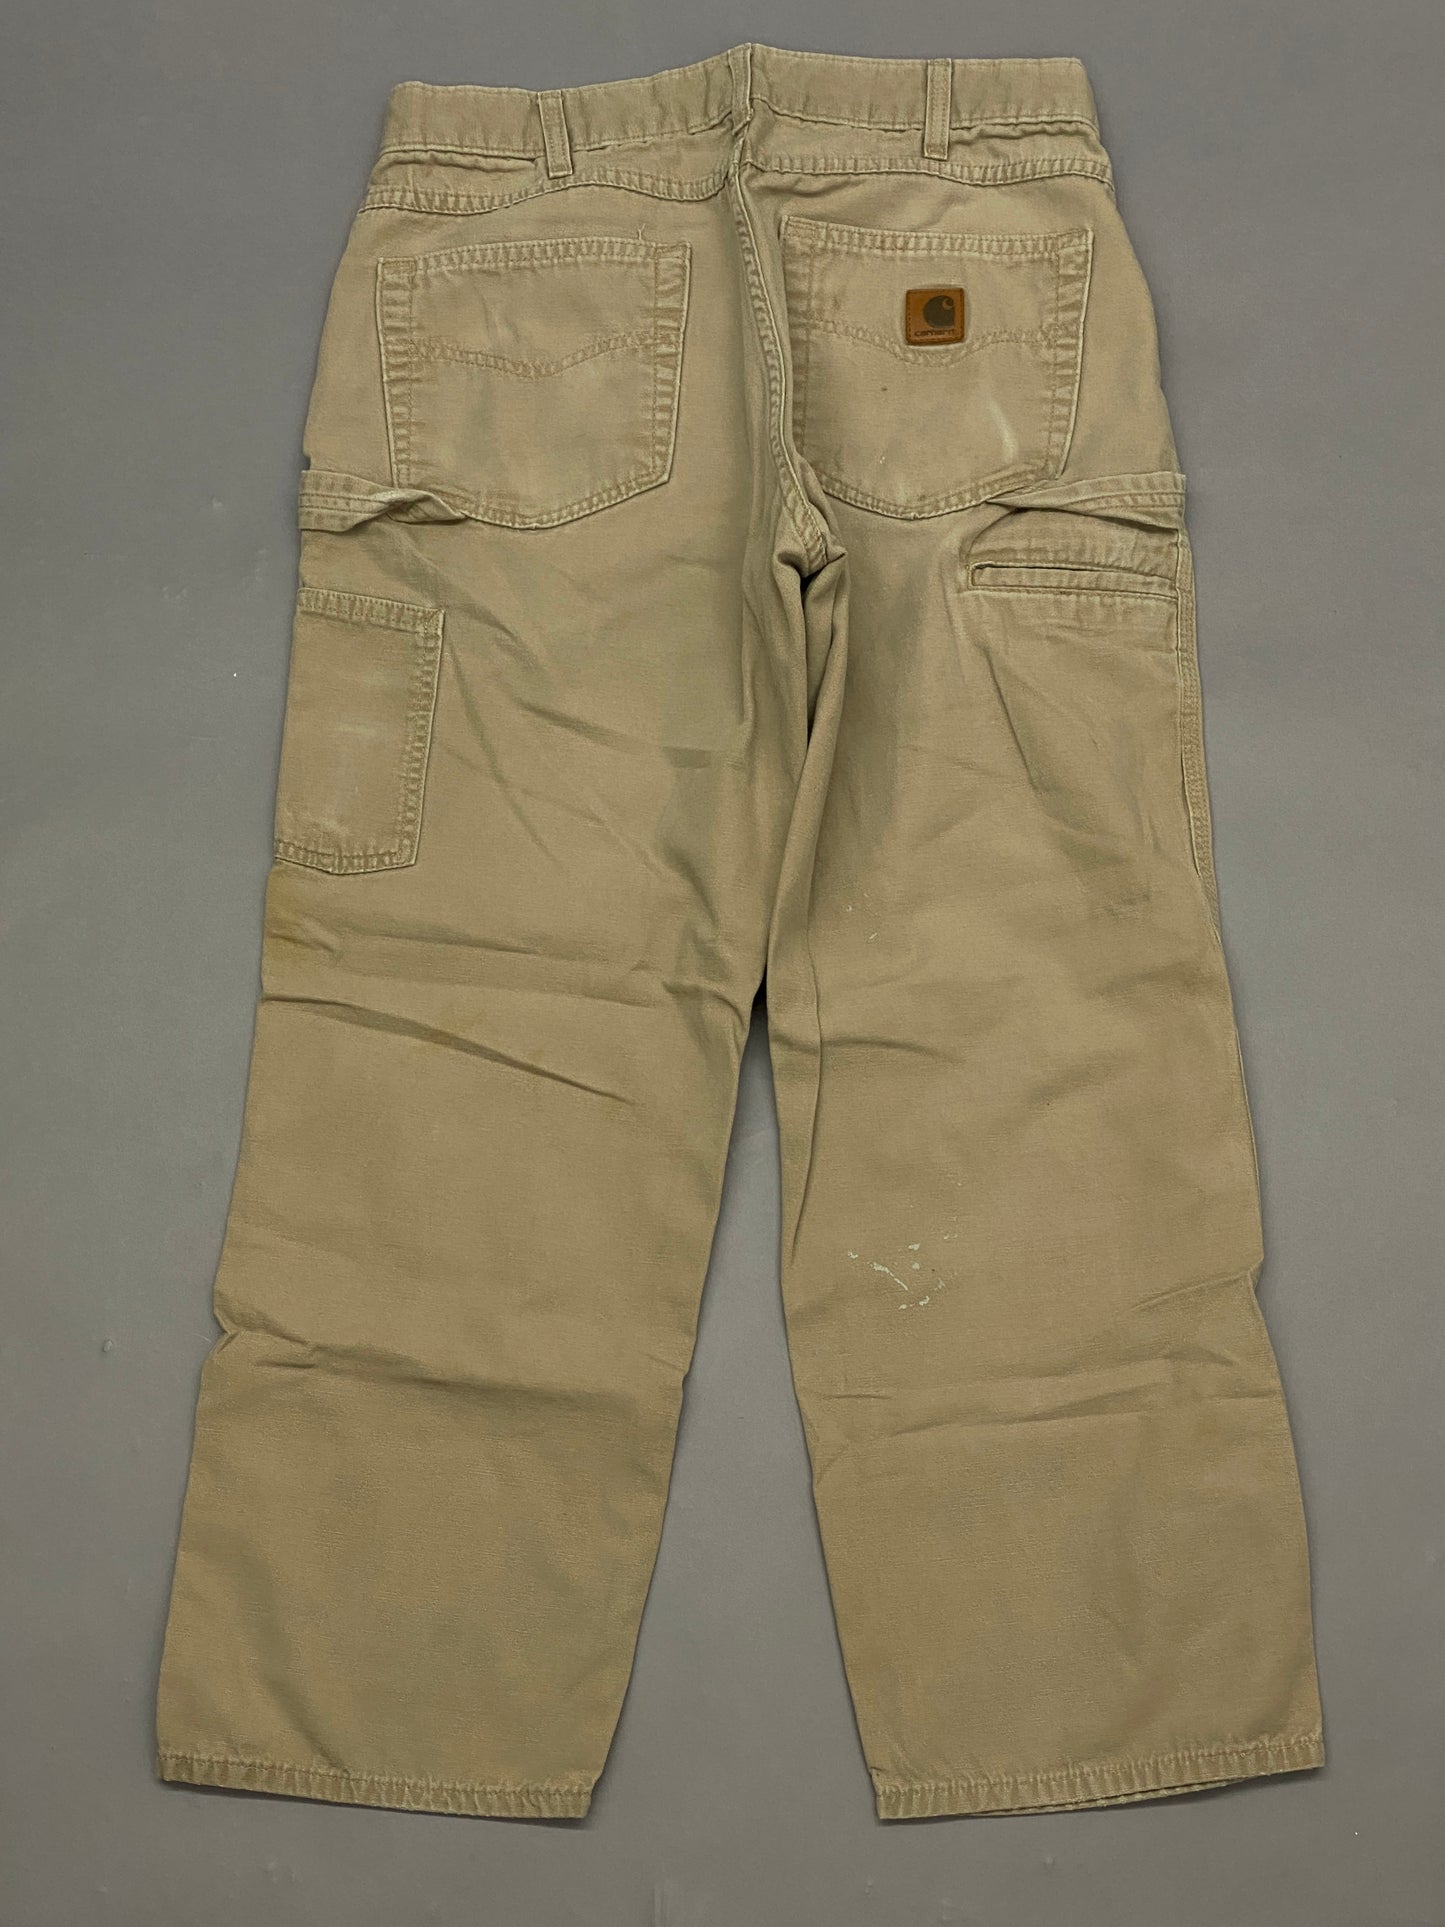 Carhartt Carpenter Vintage Pants - 32 x 30